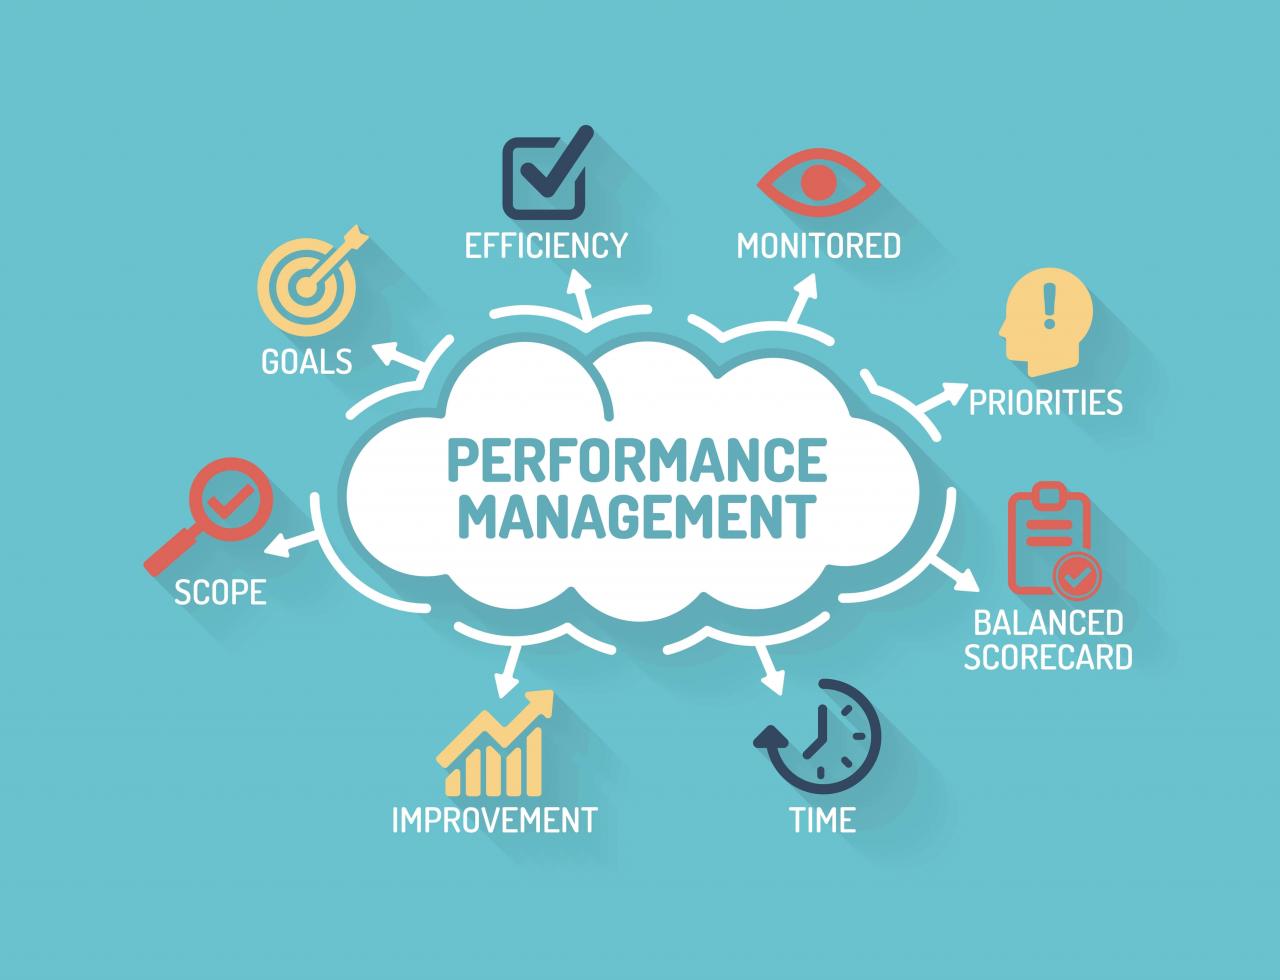 Designing an effective performance management system